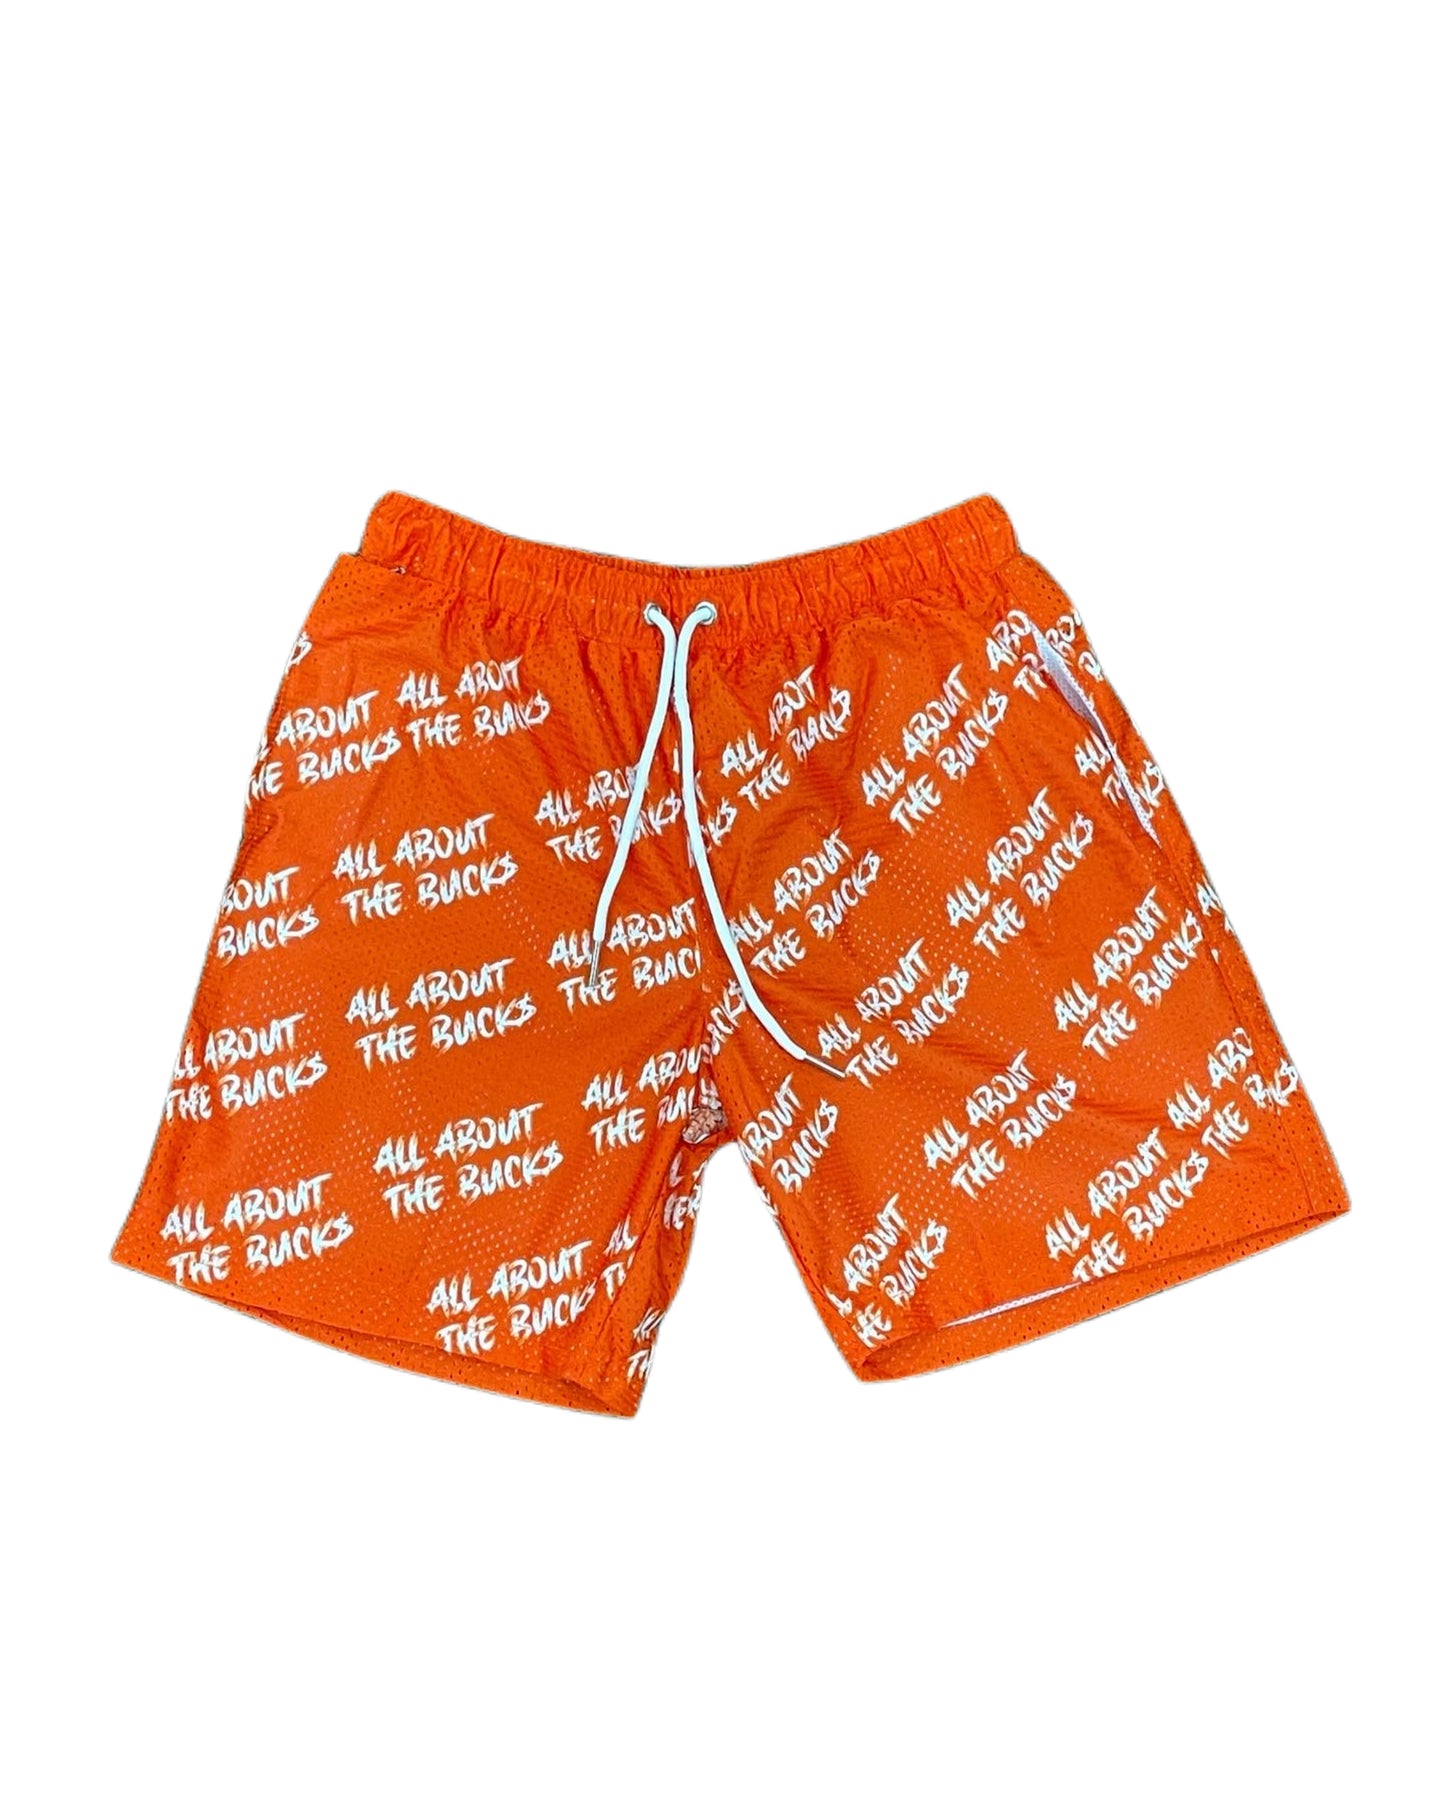 AllAboutTheBuck$ Orange Mesh Short Shorts